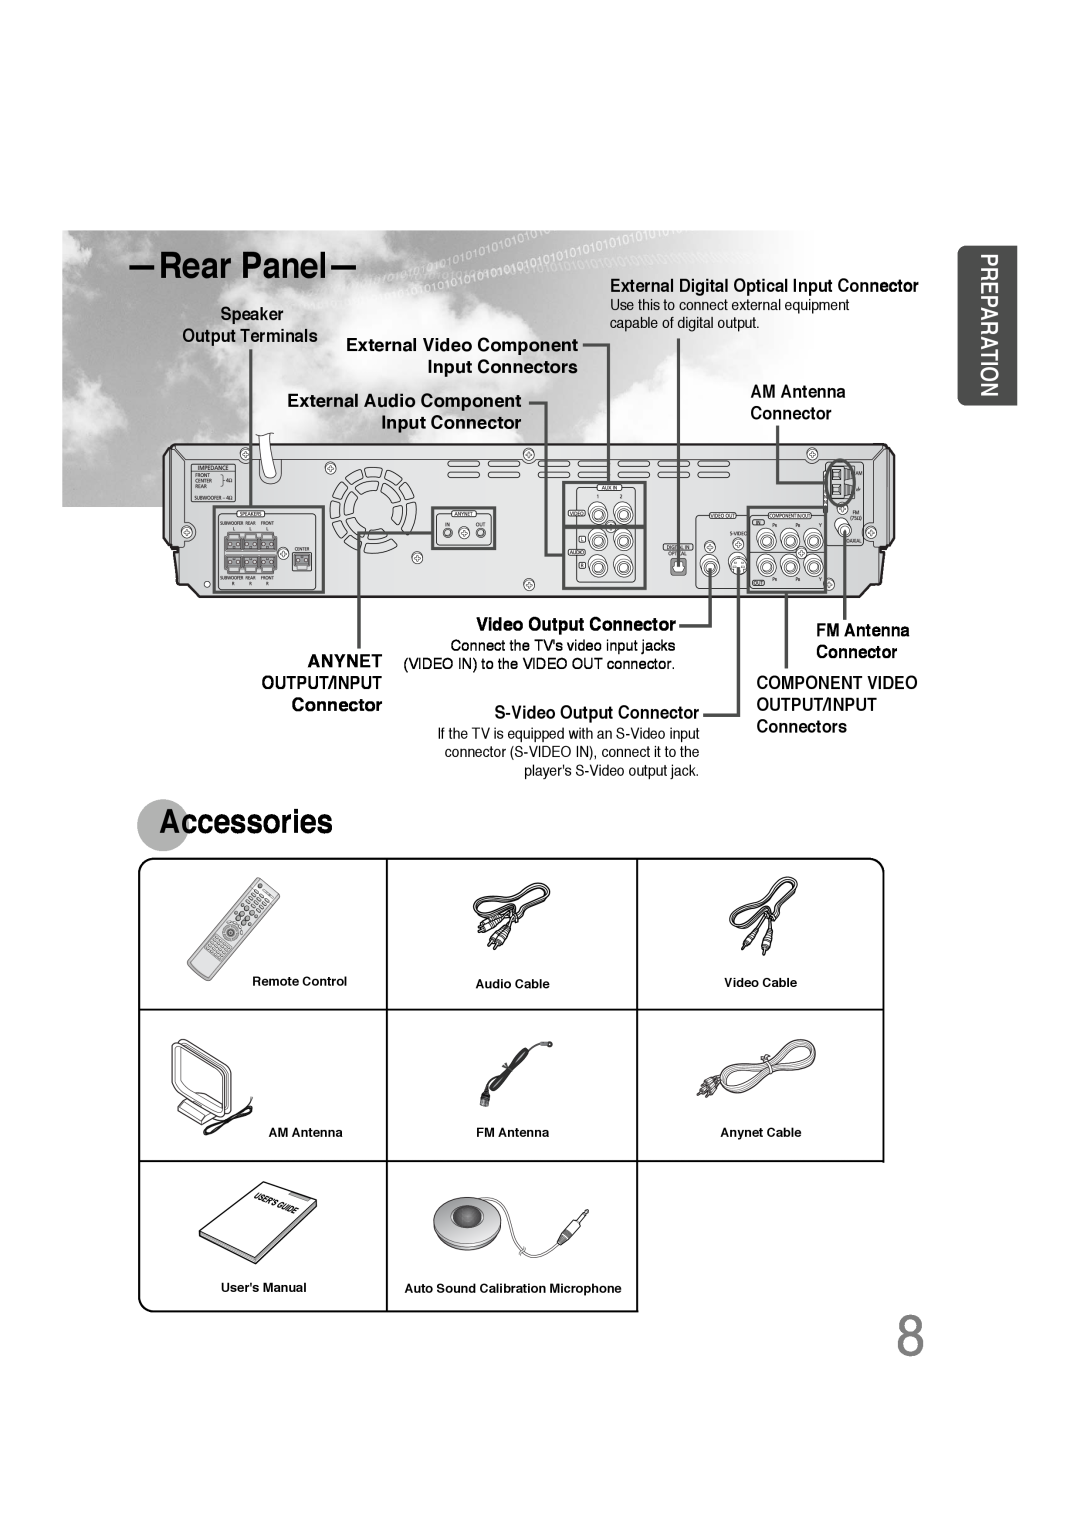 Samsung 20051111103302296 instruction manual RearPanel, Accessories, Preparation 